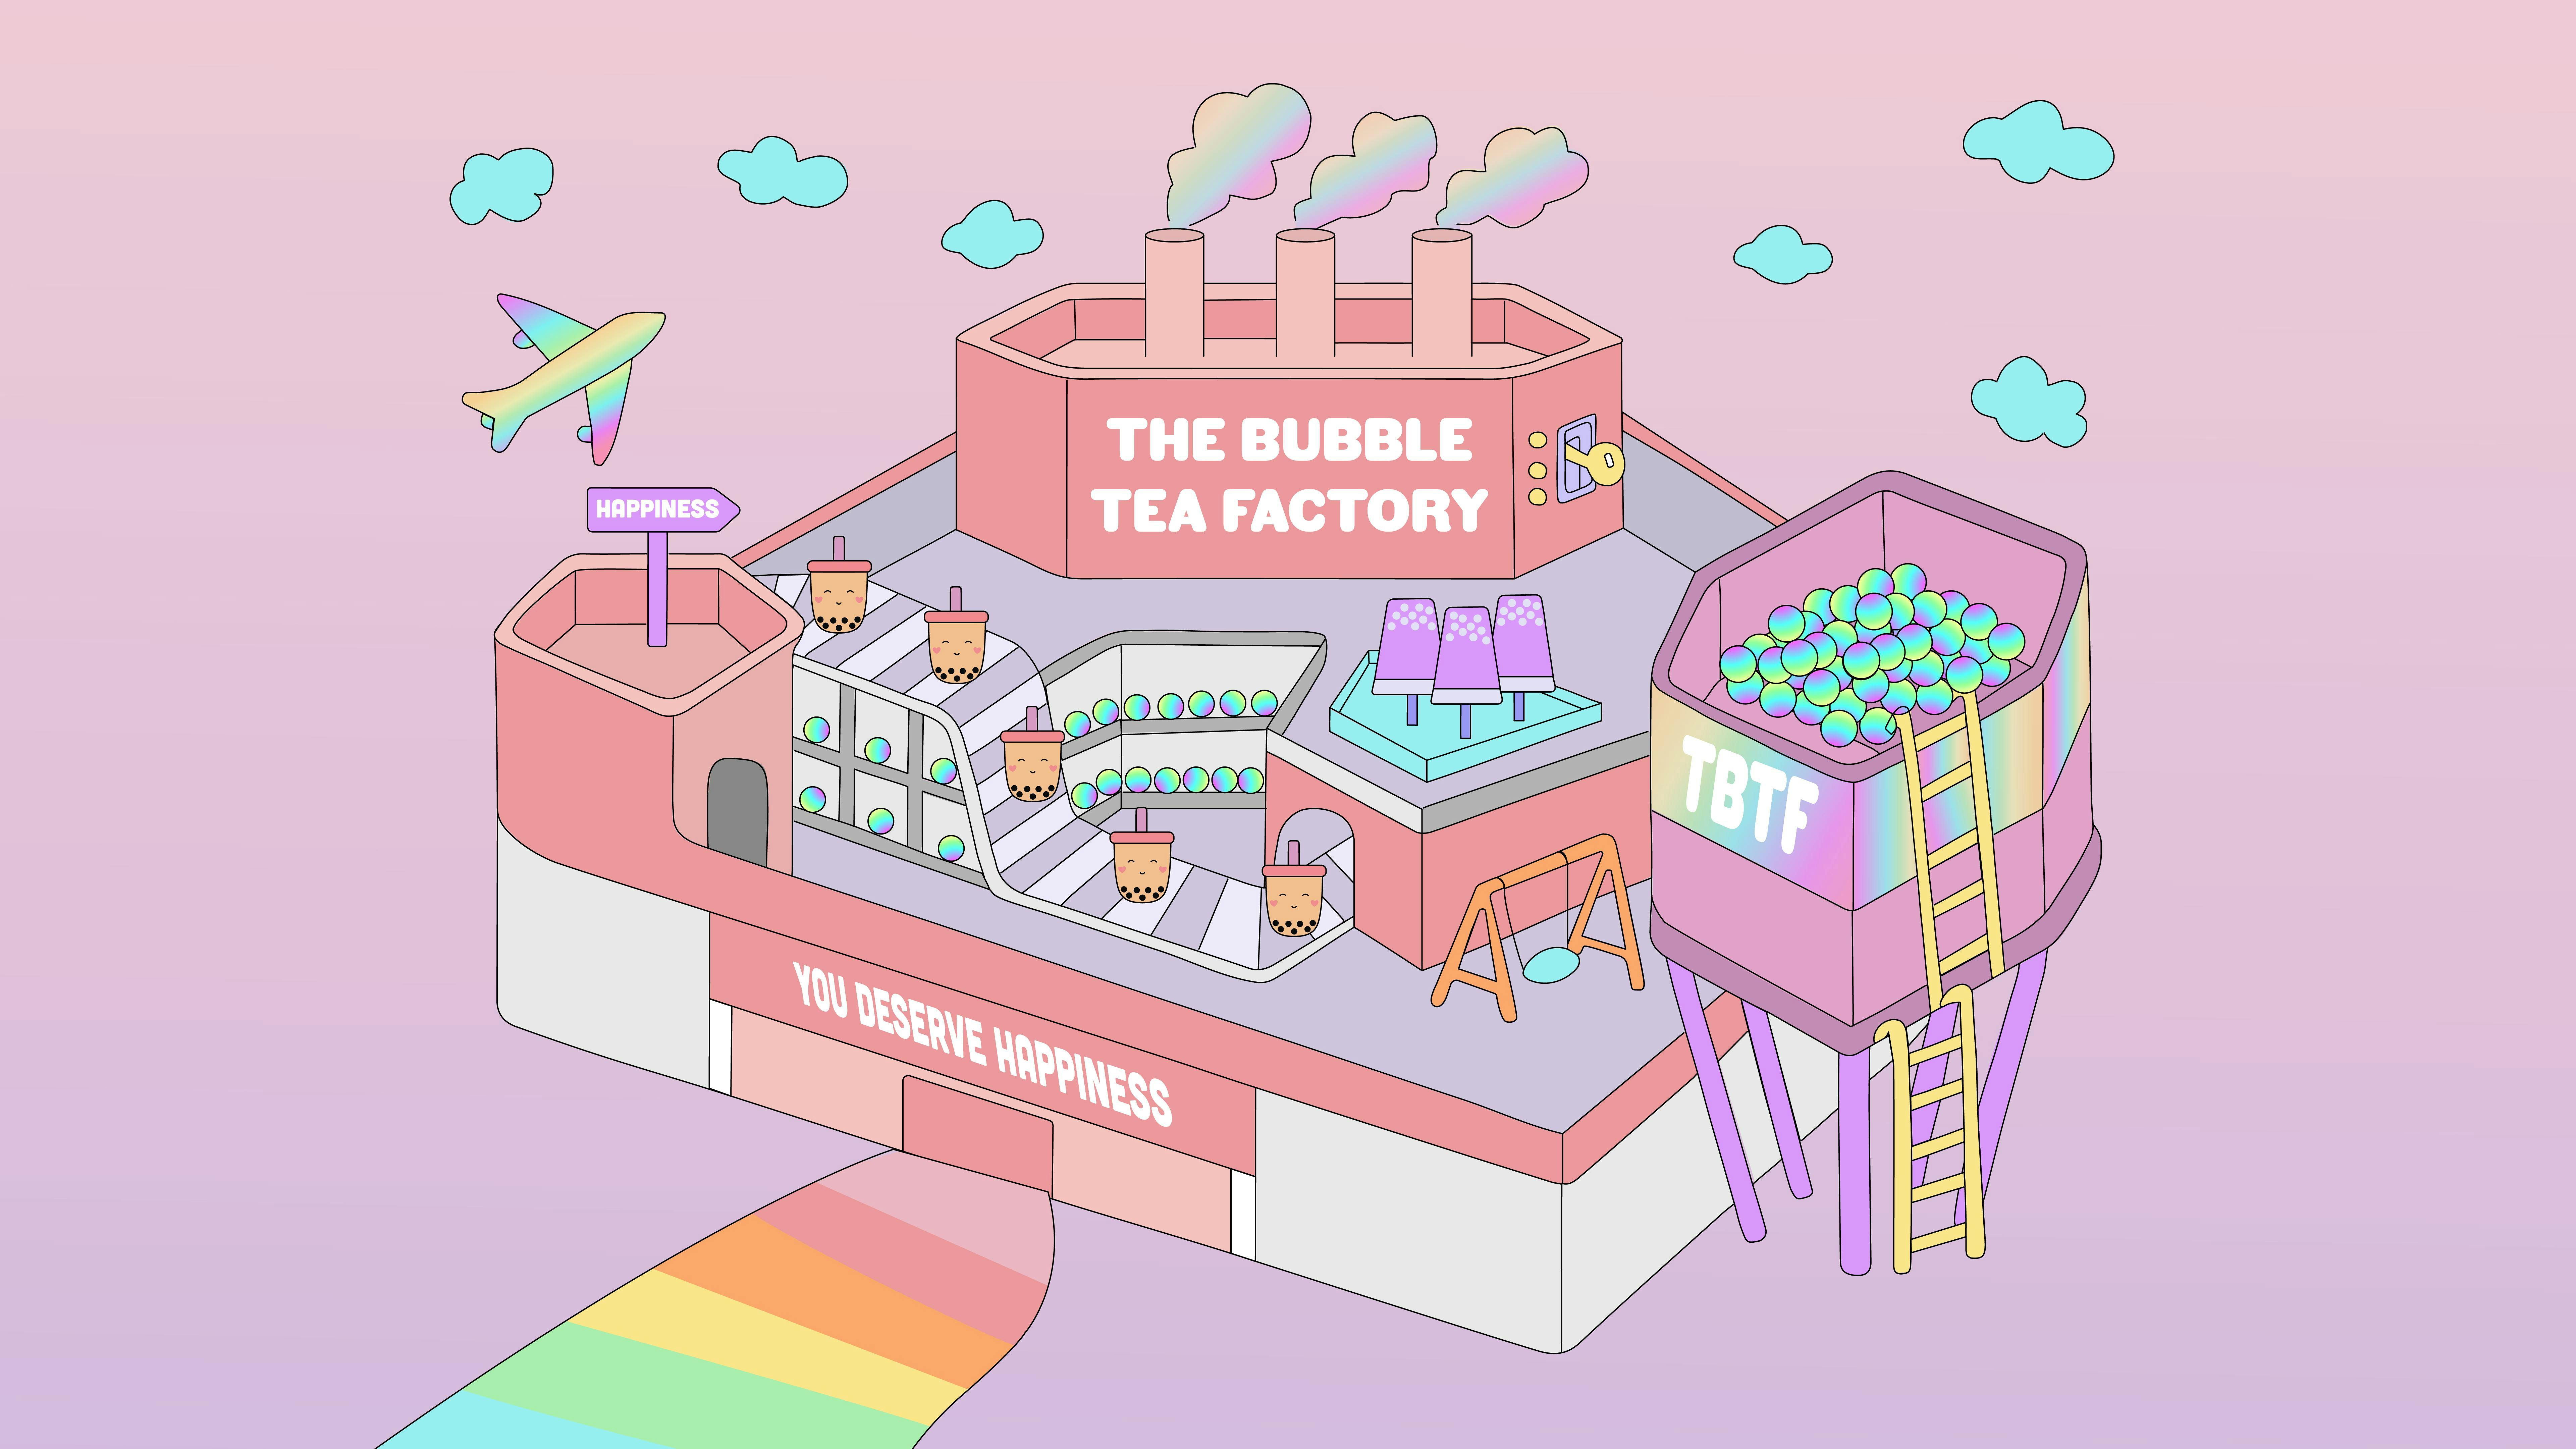 The Bubble Tea Factory - Thu, 24 Oct 2019